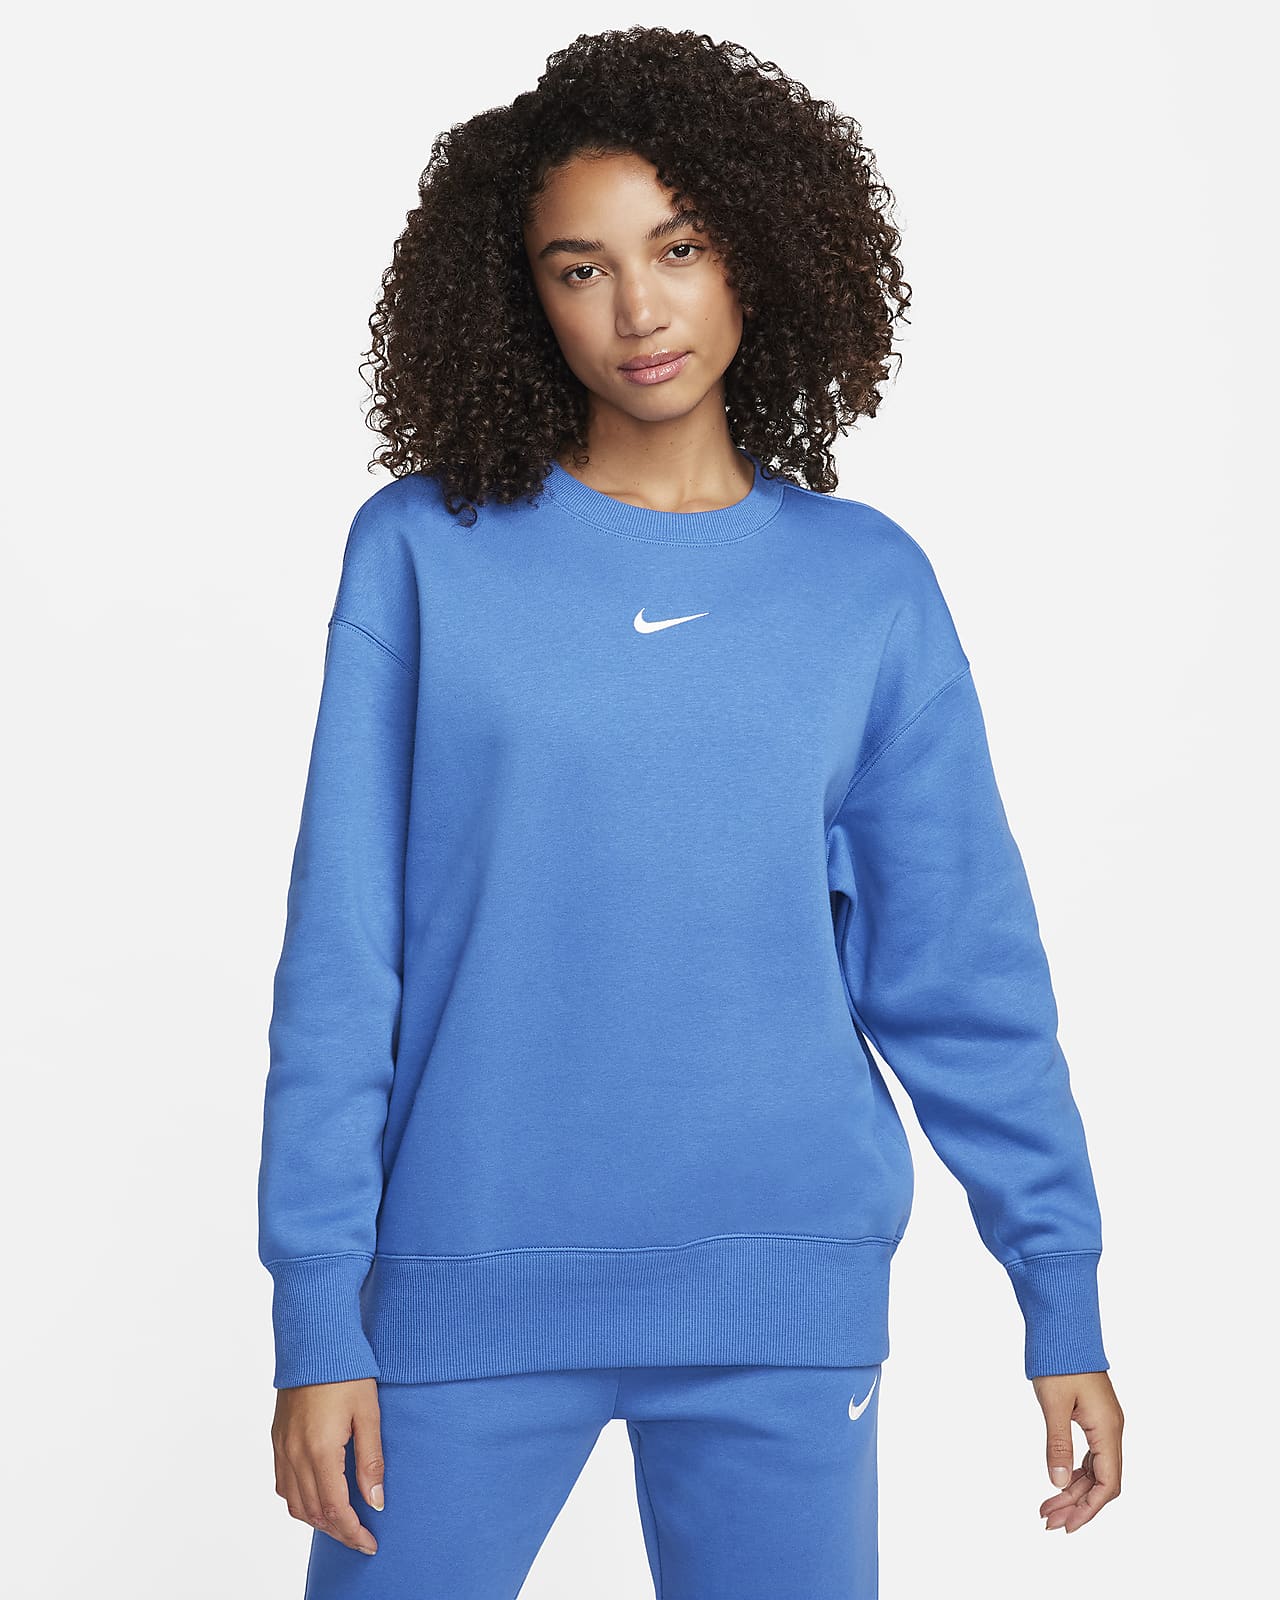 Nike Sportswear Phoenix Fleece Dessuadora oversized de coll rodó - Dona